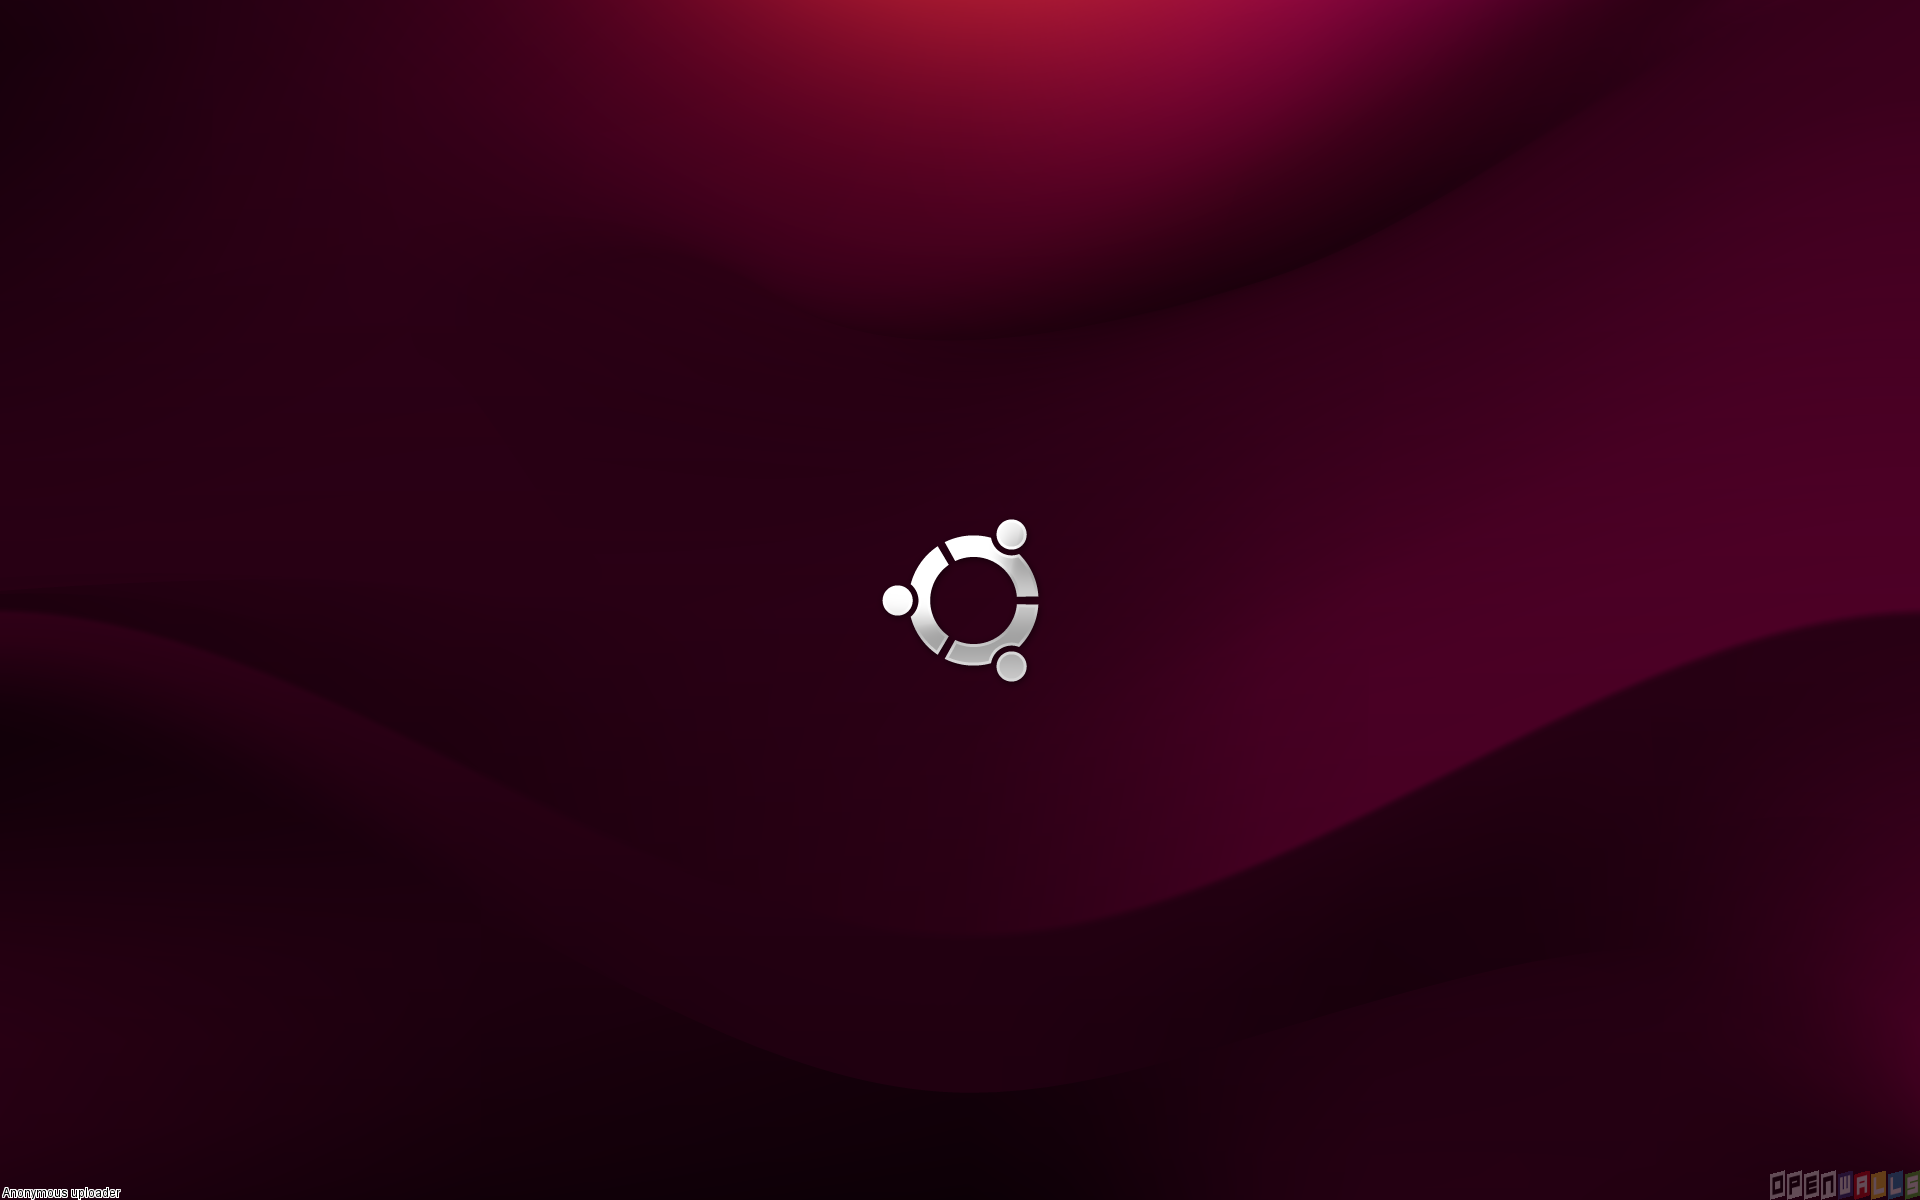 ubuntu desktop background